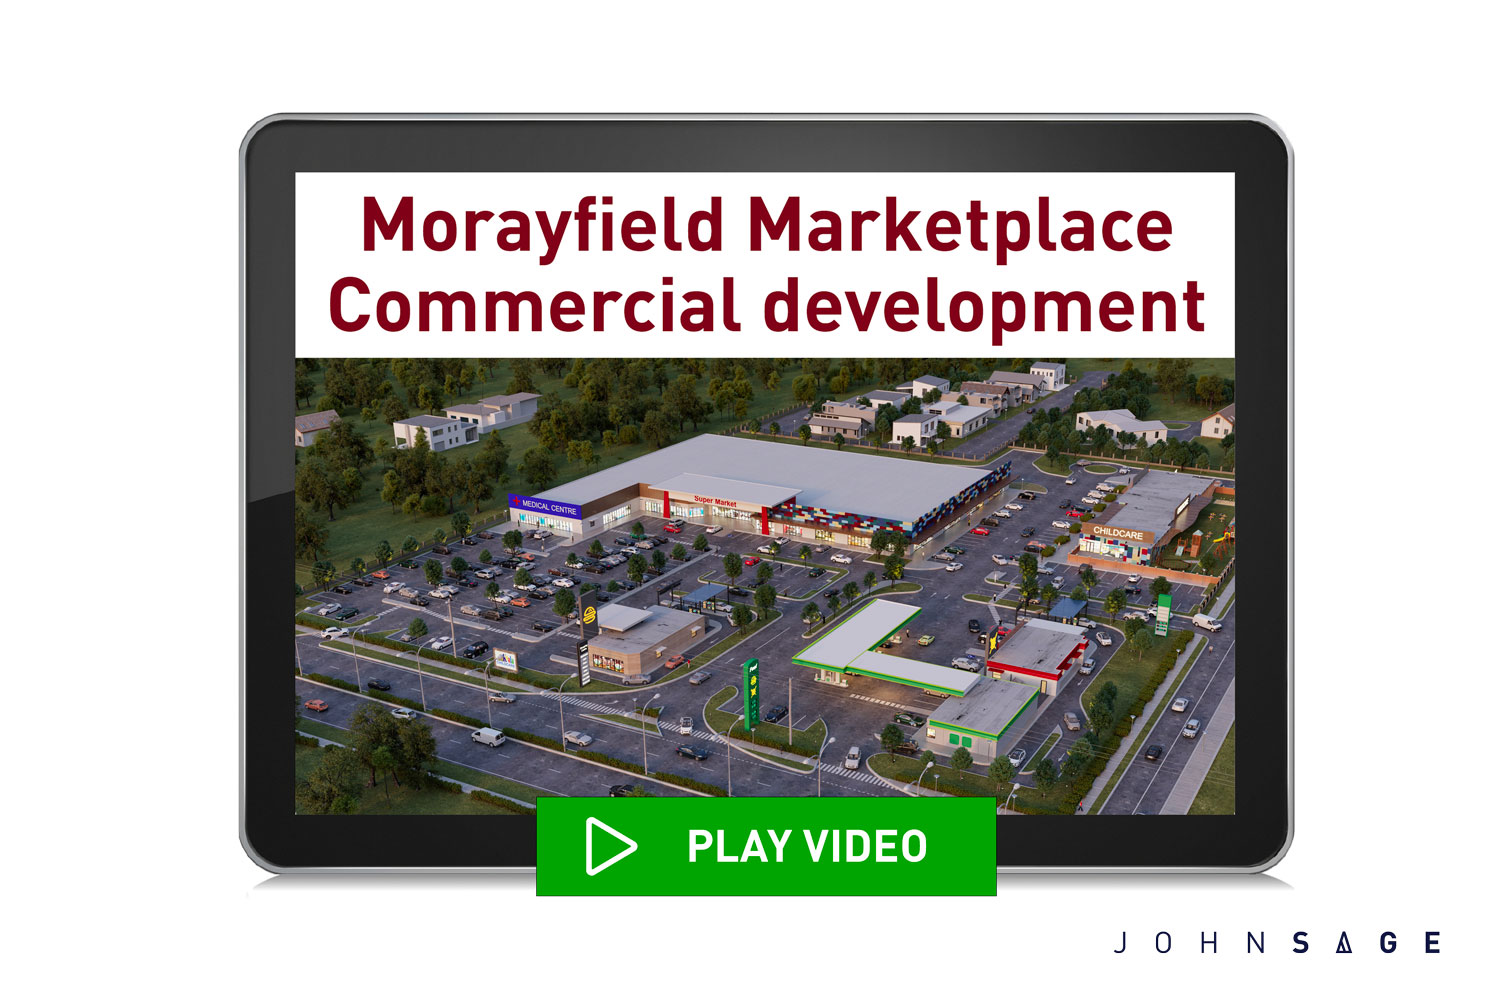 Watch video. Morayfield Marketplace Commercial development.